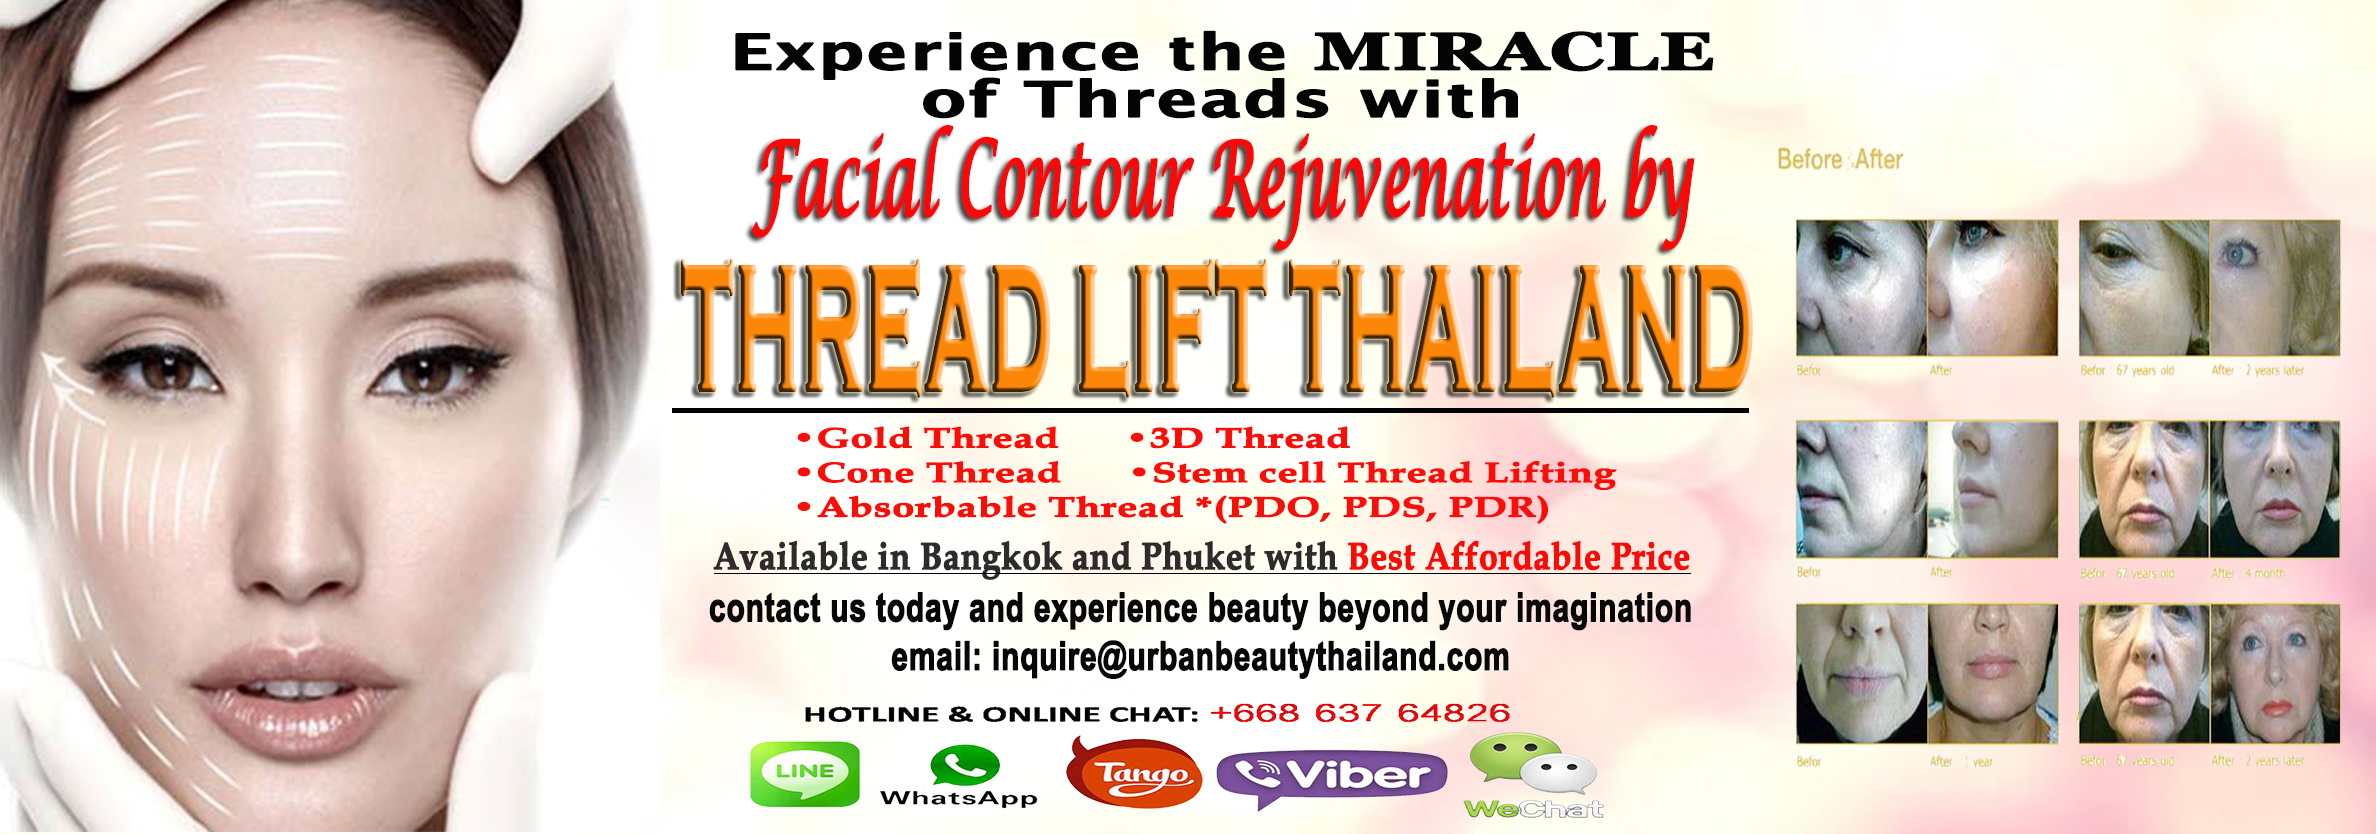 thread lift thailand mini face lift